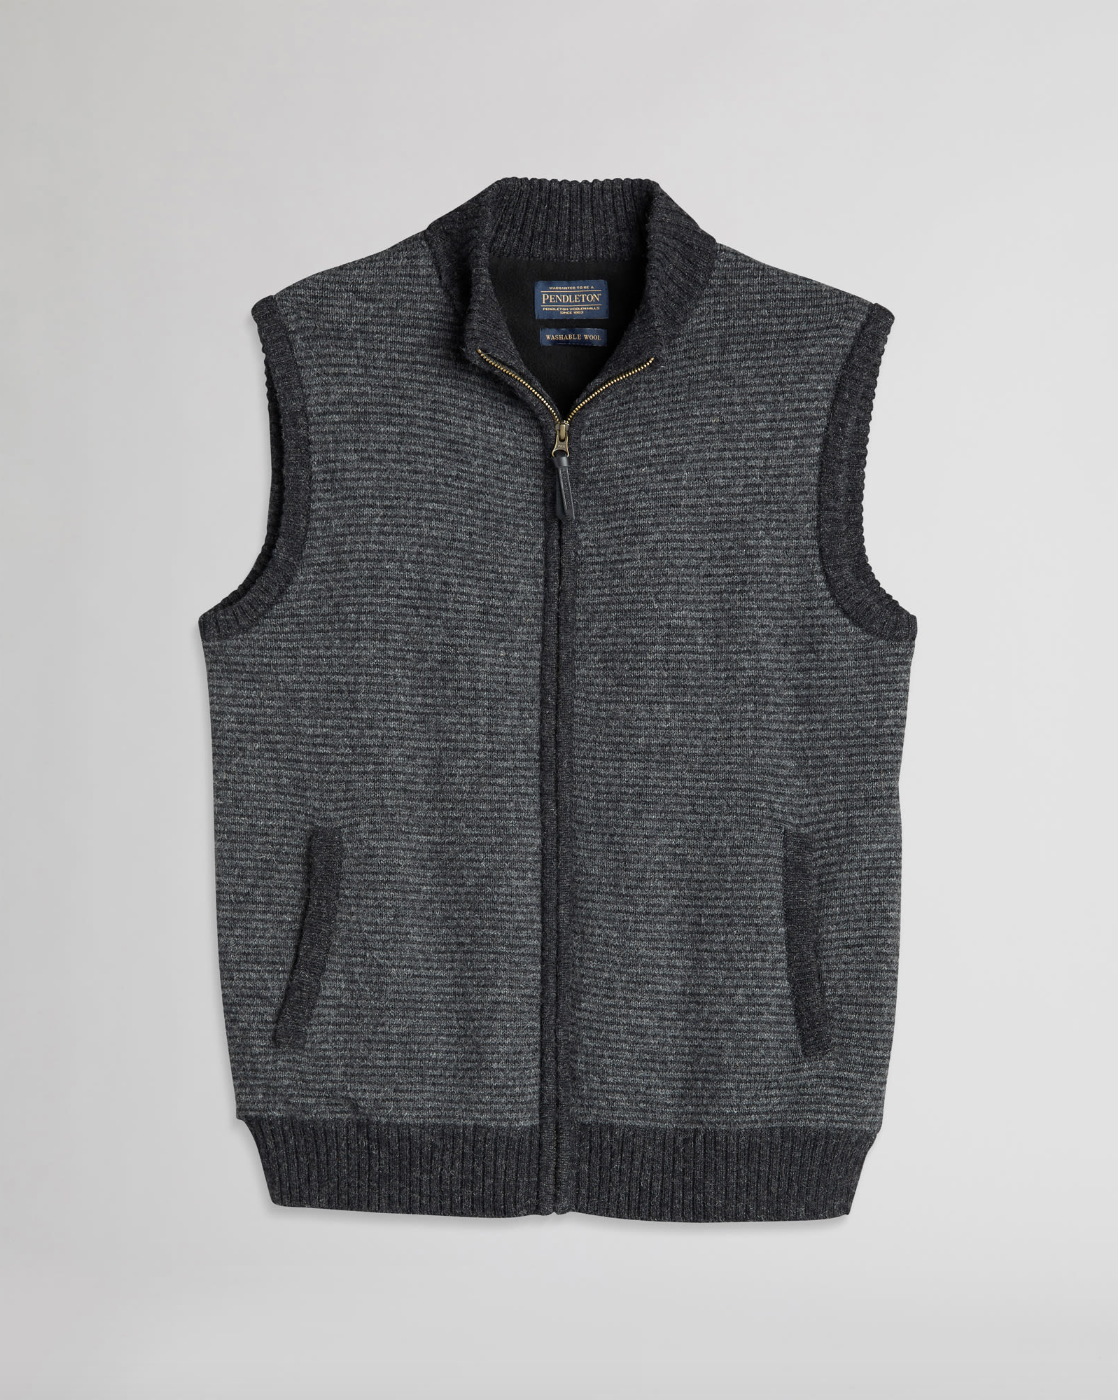 Shetland Sweater VestCharcoal/Black